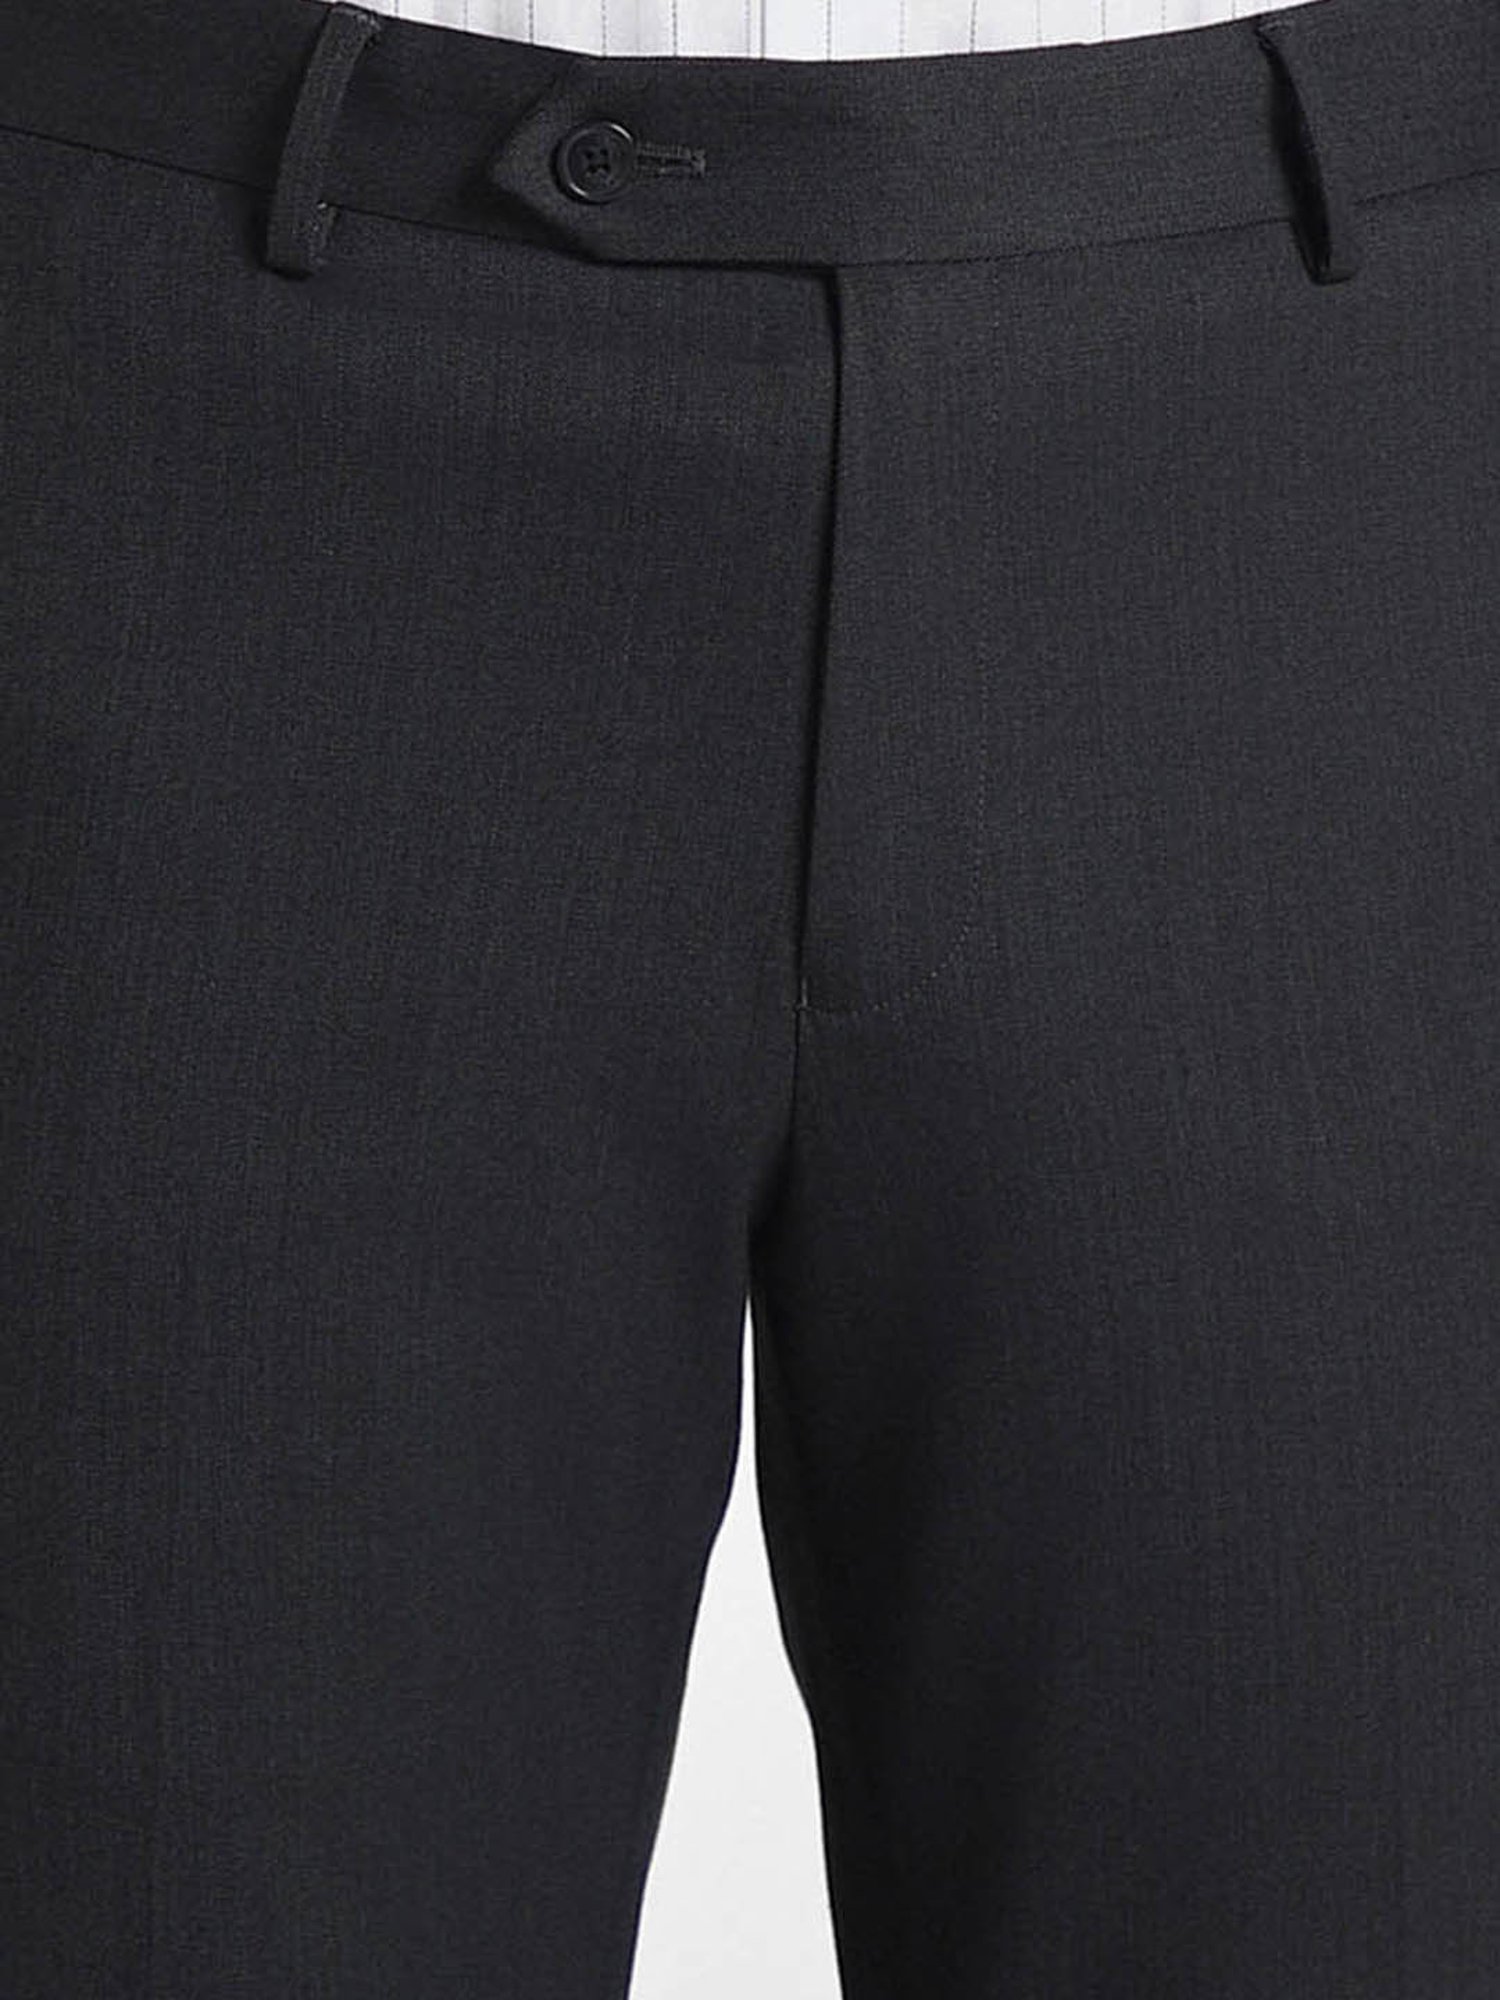 Buy Peter England Men Grey Formal Trouser online